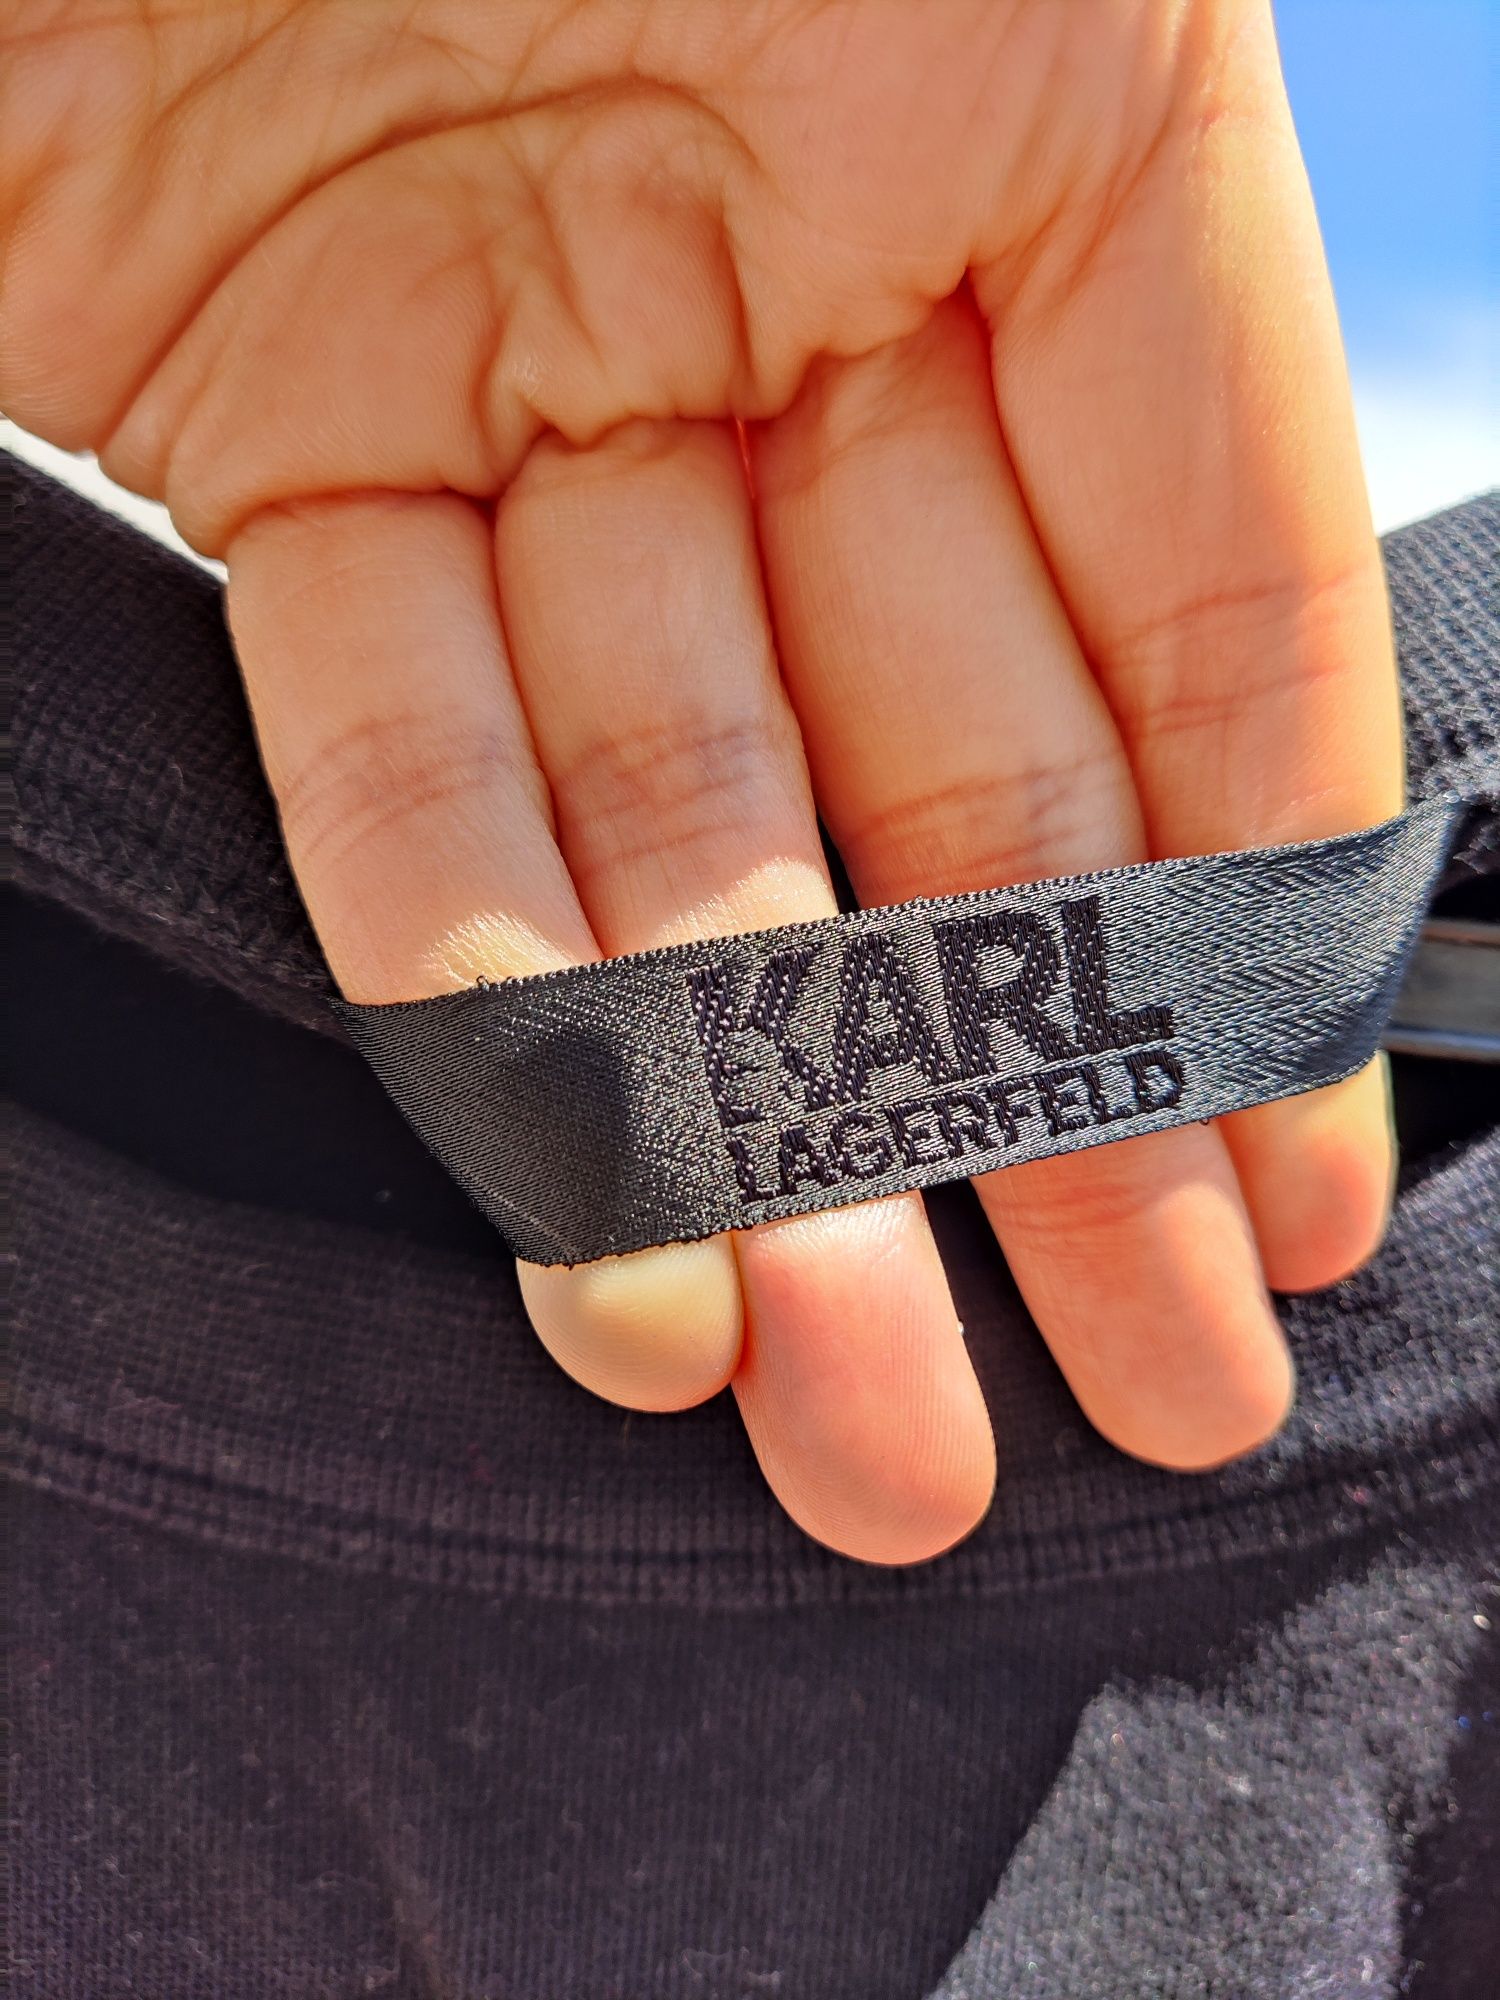 T-shirt oversize Karl Lagerfeld